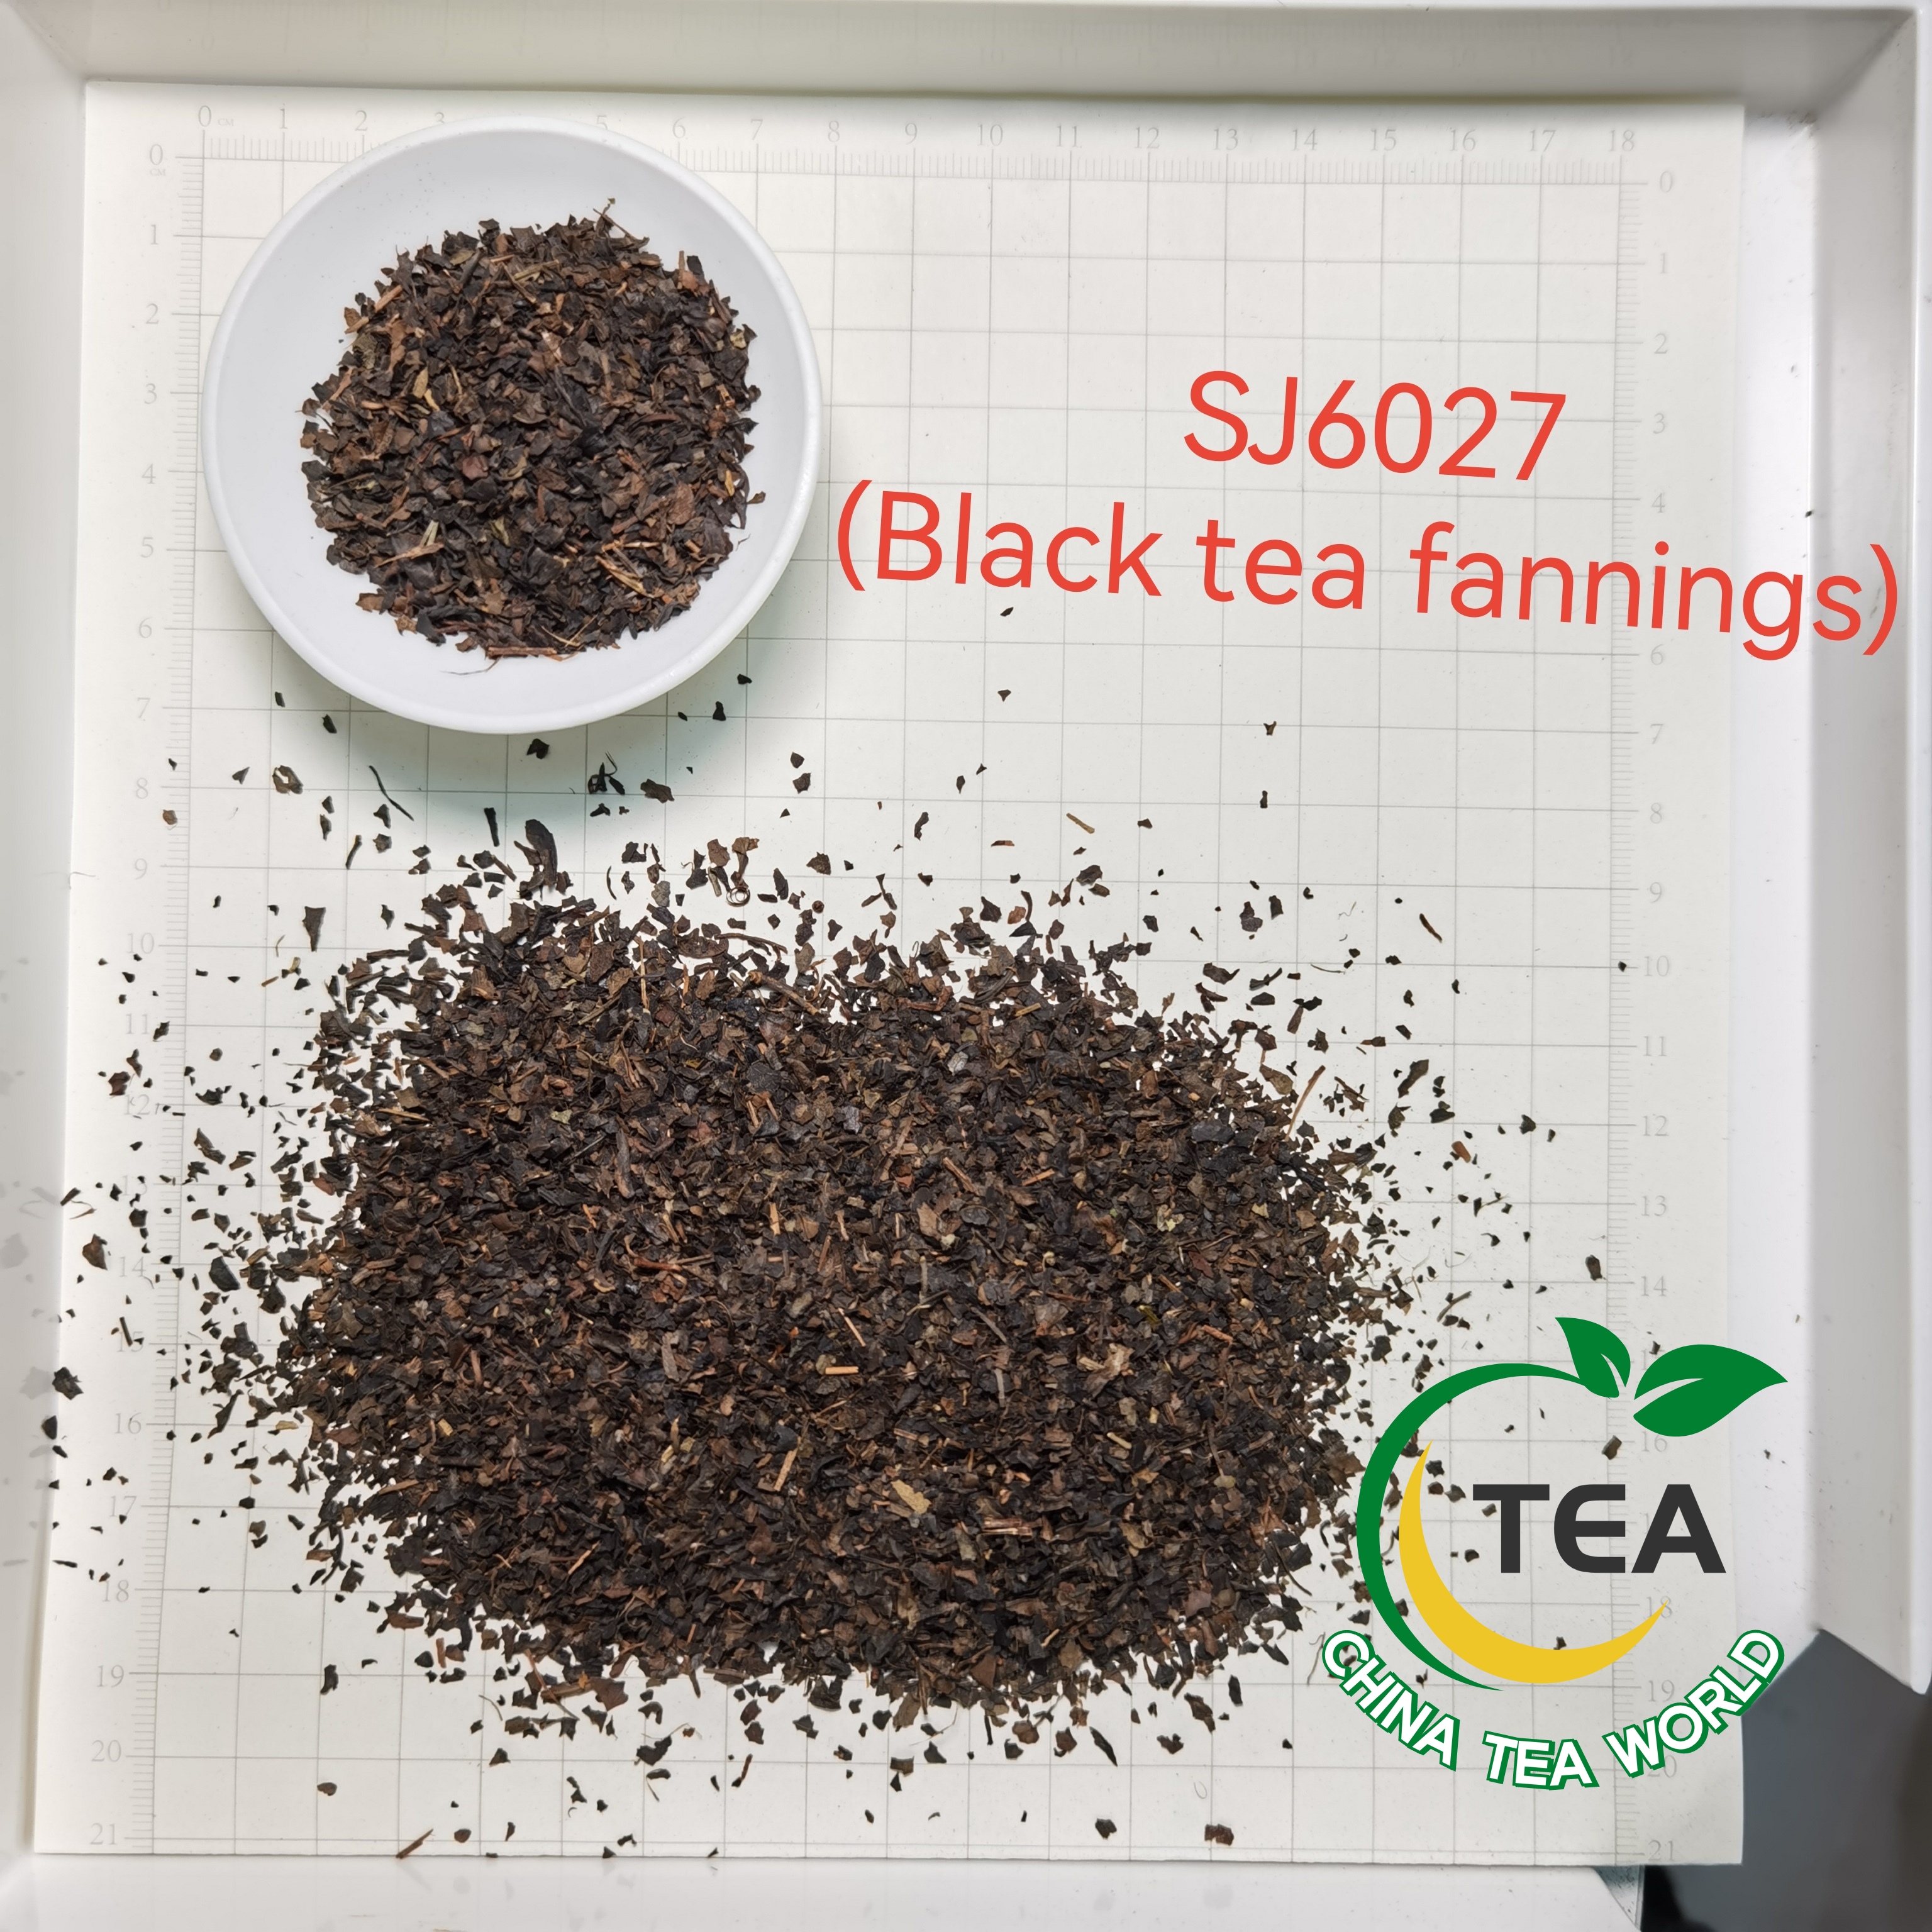 Black tea fannings